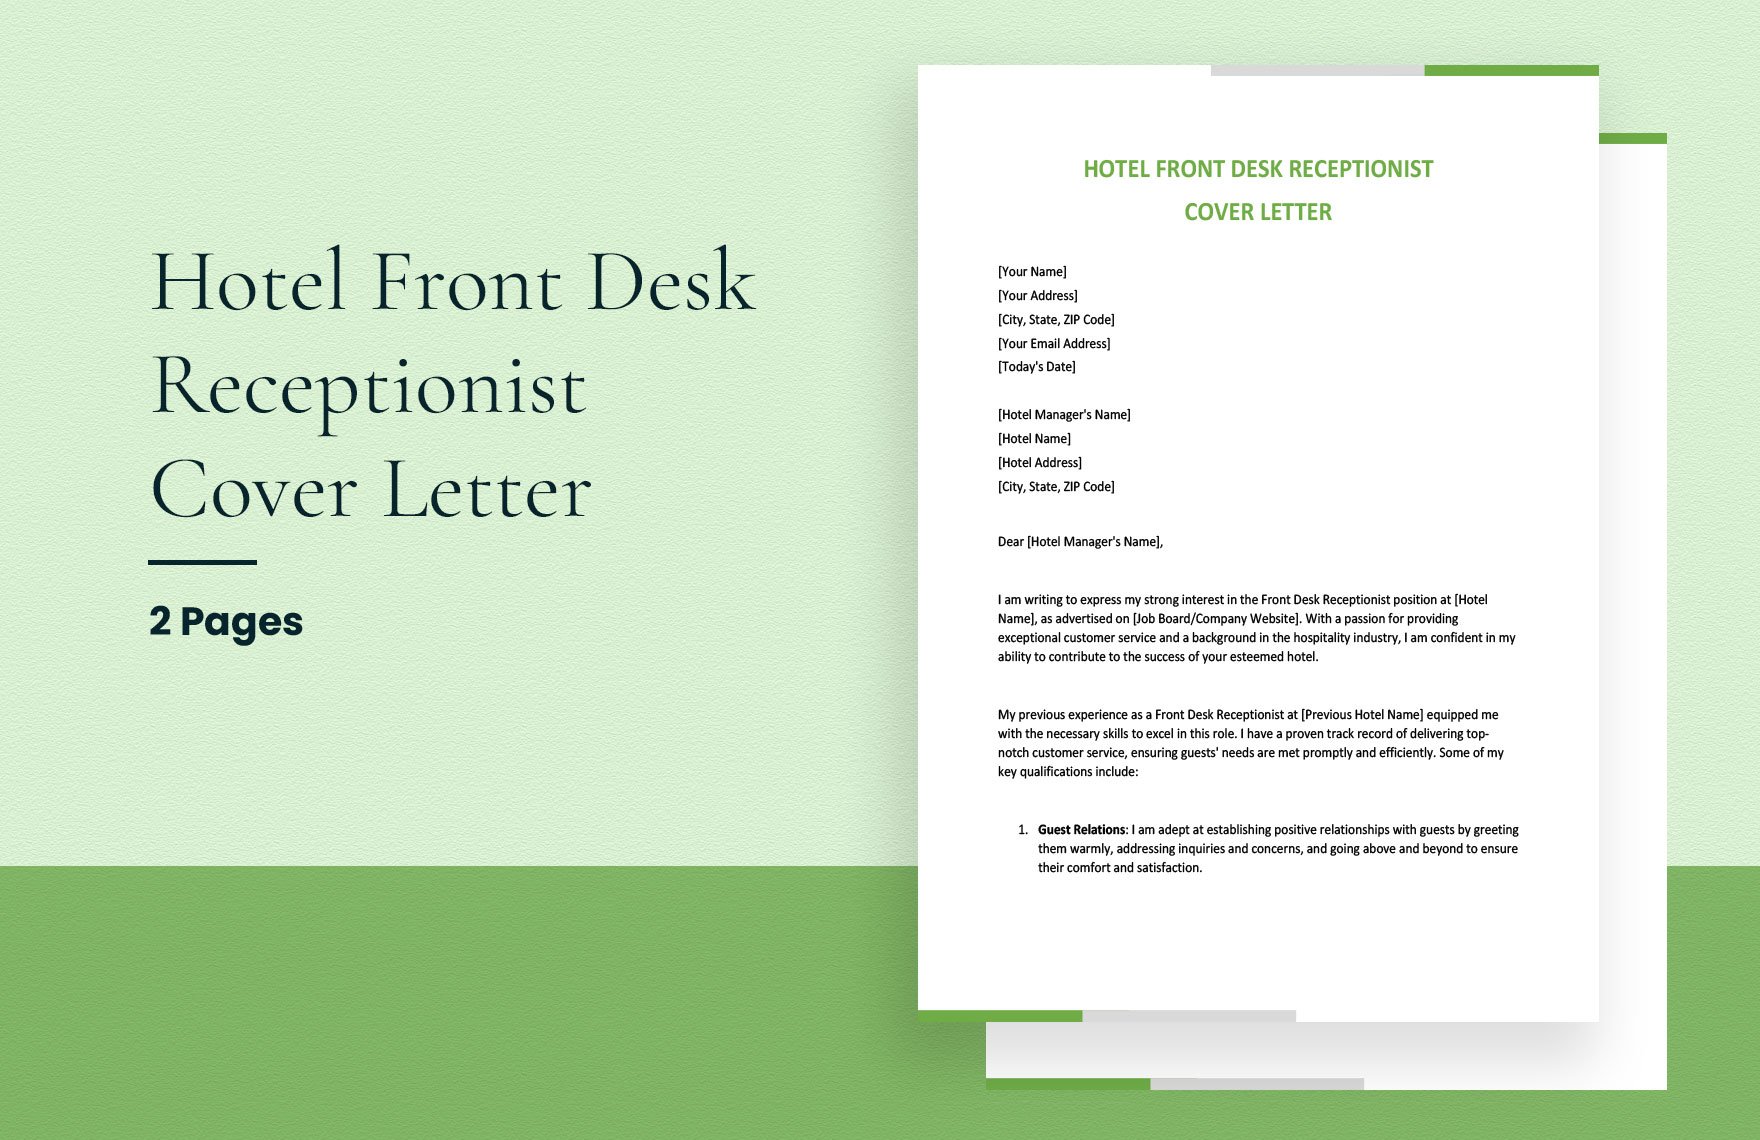 Hotel Front Desk Receptionist Cover Letter